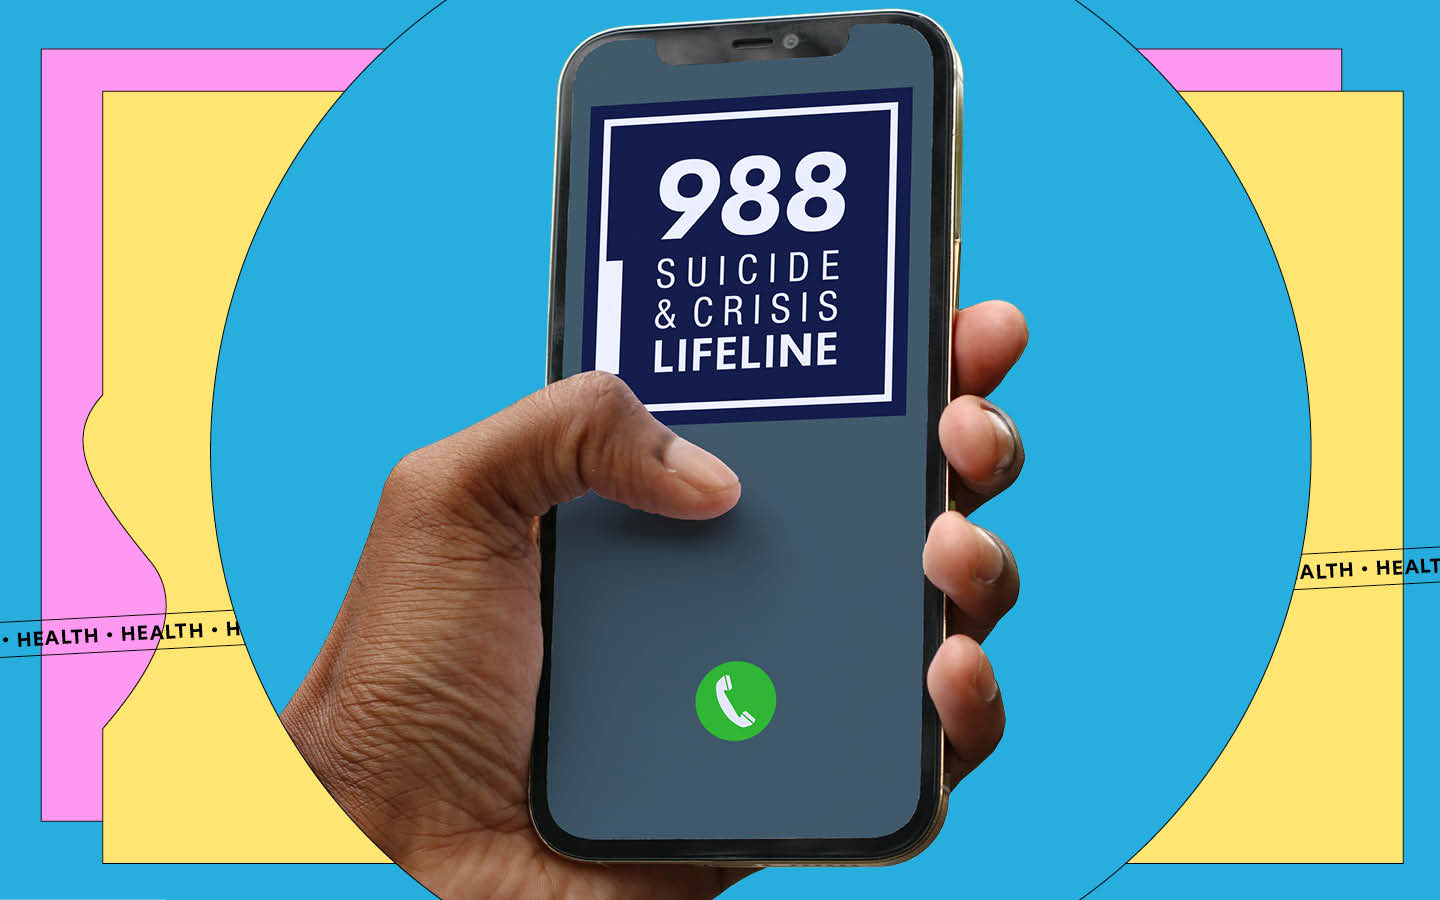 SAMHSA 988 suicide crisis lifeline on a smartphone call screen